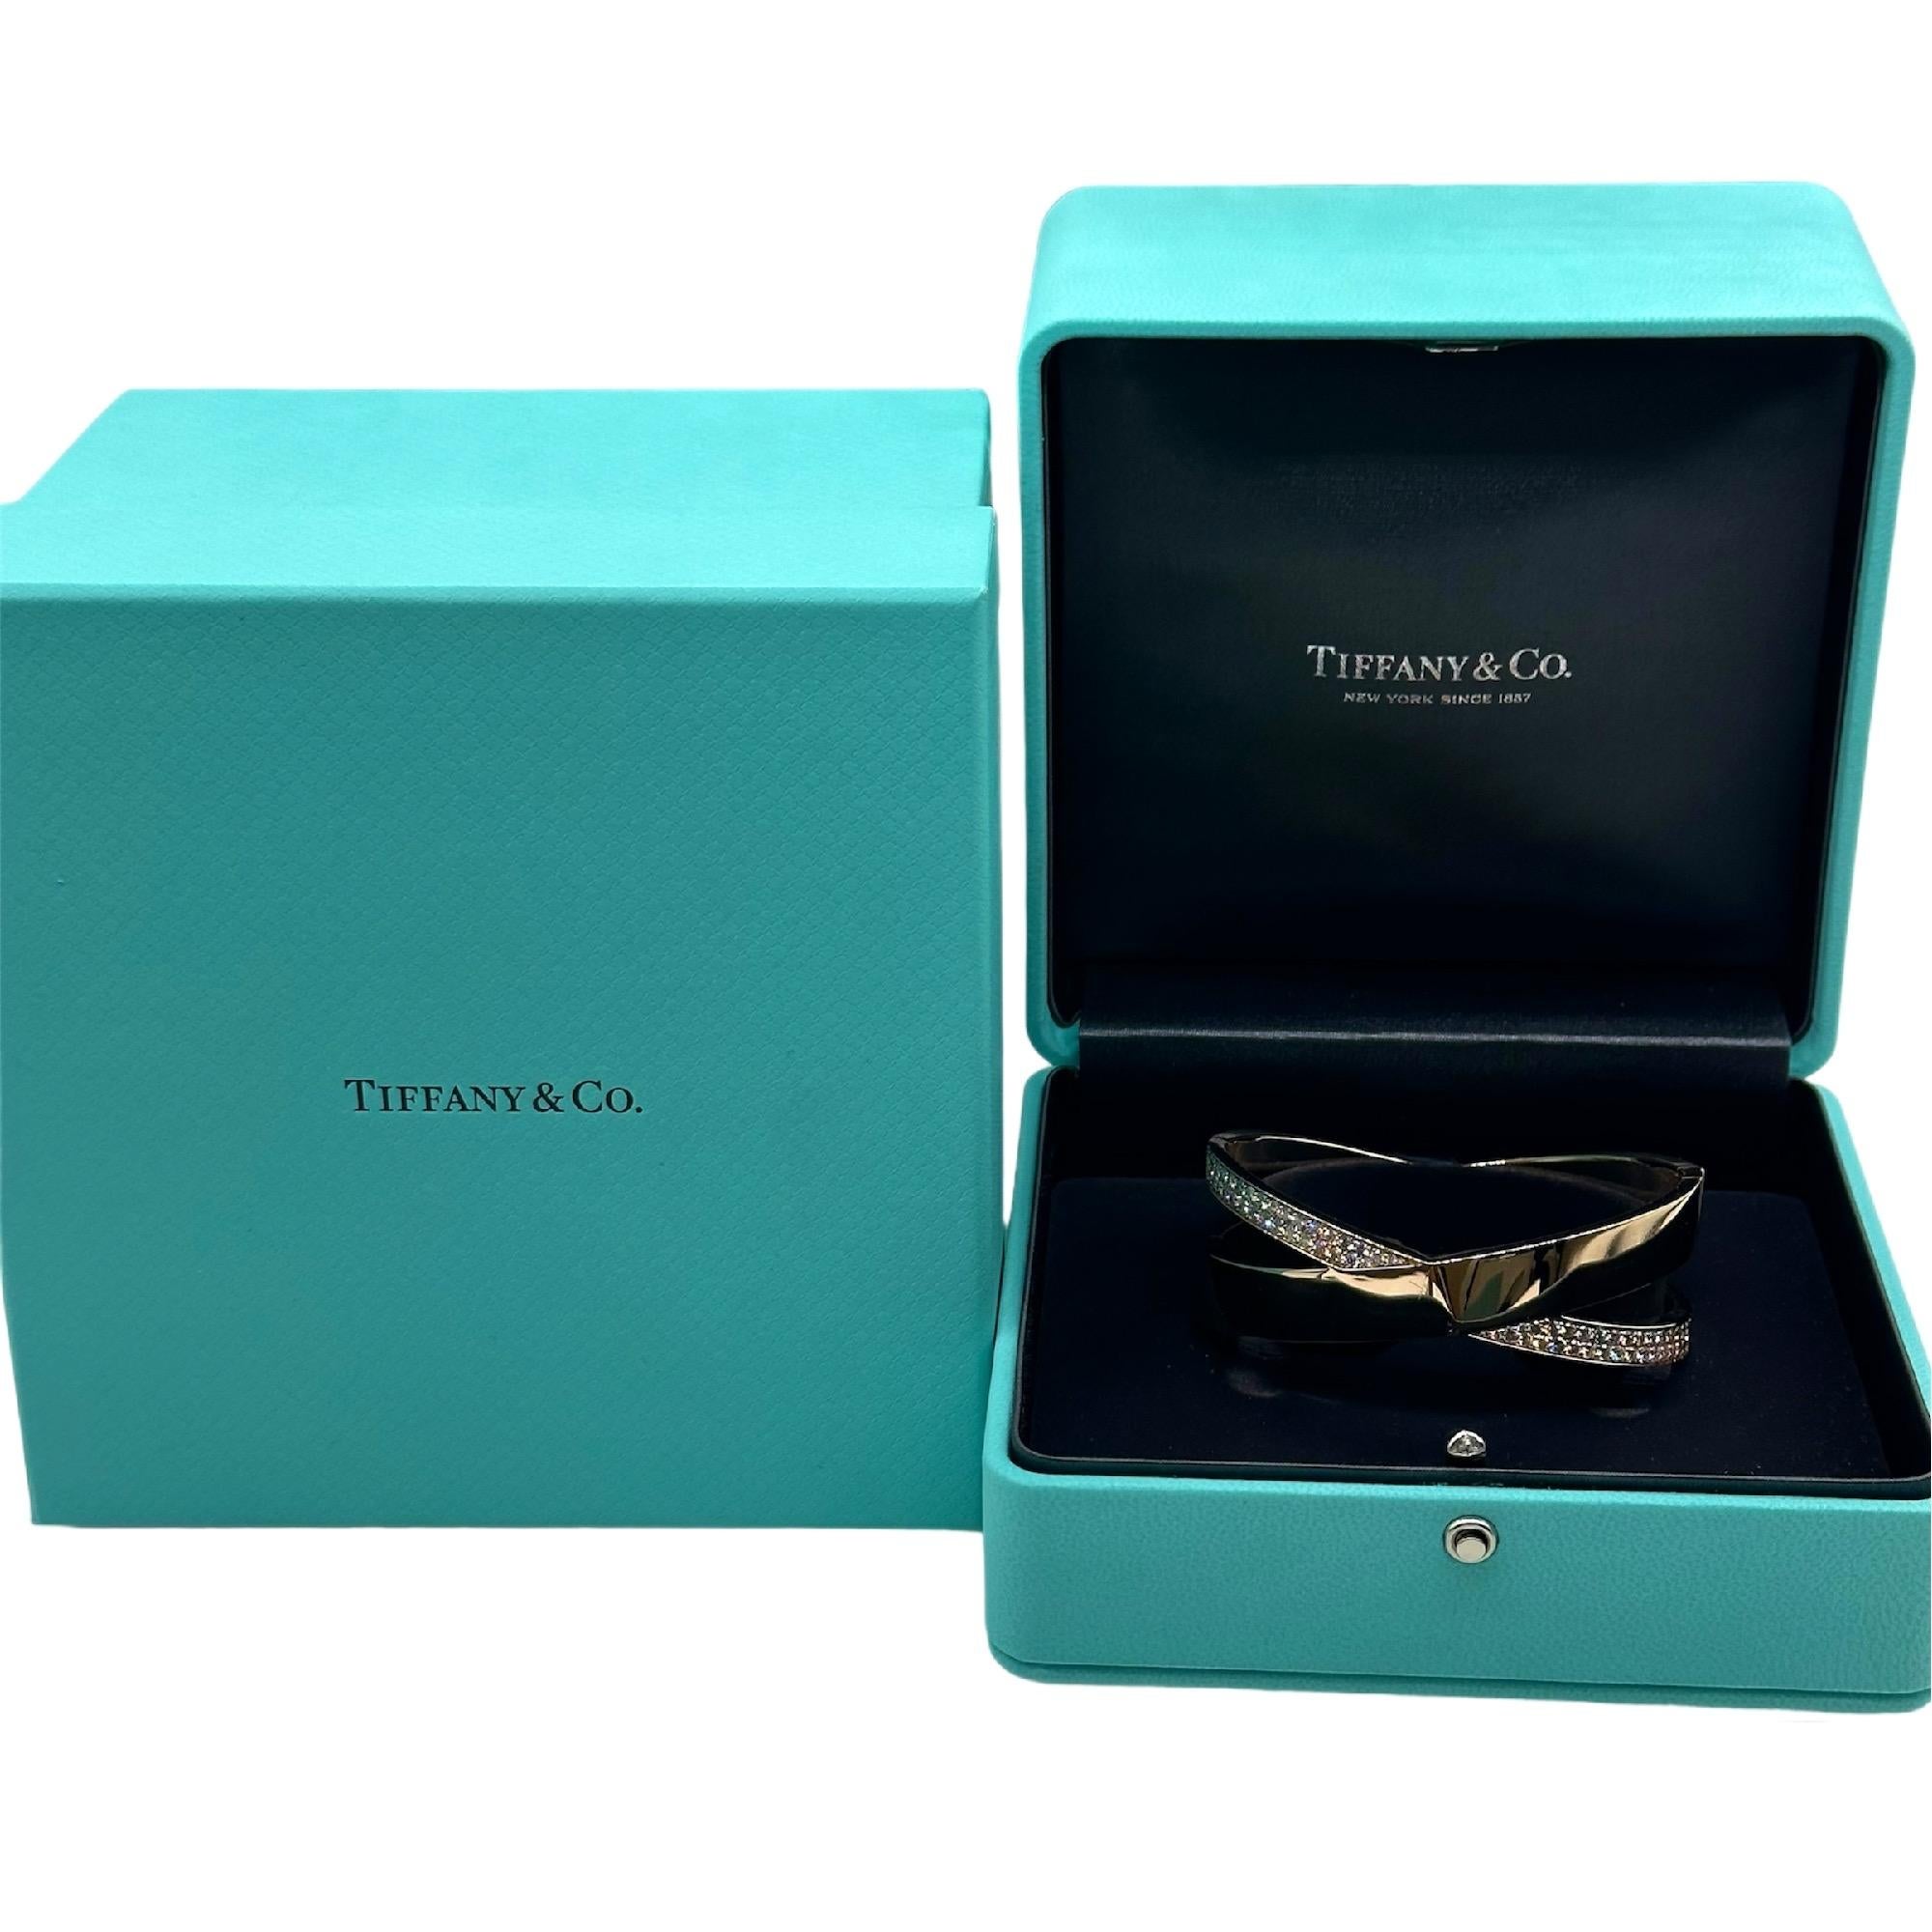 Tiffany & Co. Atlas Wide X Diamond Bangle Bracelet
Style:  Bangle 
Metal:   18kt Rose Gold
Size:  Medium
Diamonds:  66 Round Brilliant Diamonds 2.27 tcw
Measurements:  1' Inch Wide - 6.5' measured inside circumfrence
Hallmark:  ©TIFFANY&CO. Au750